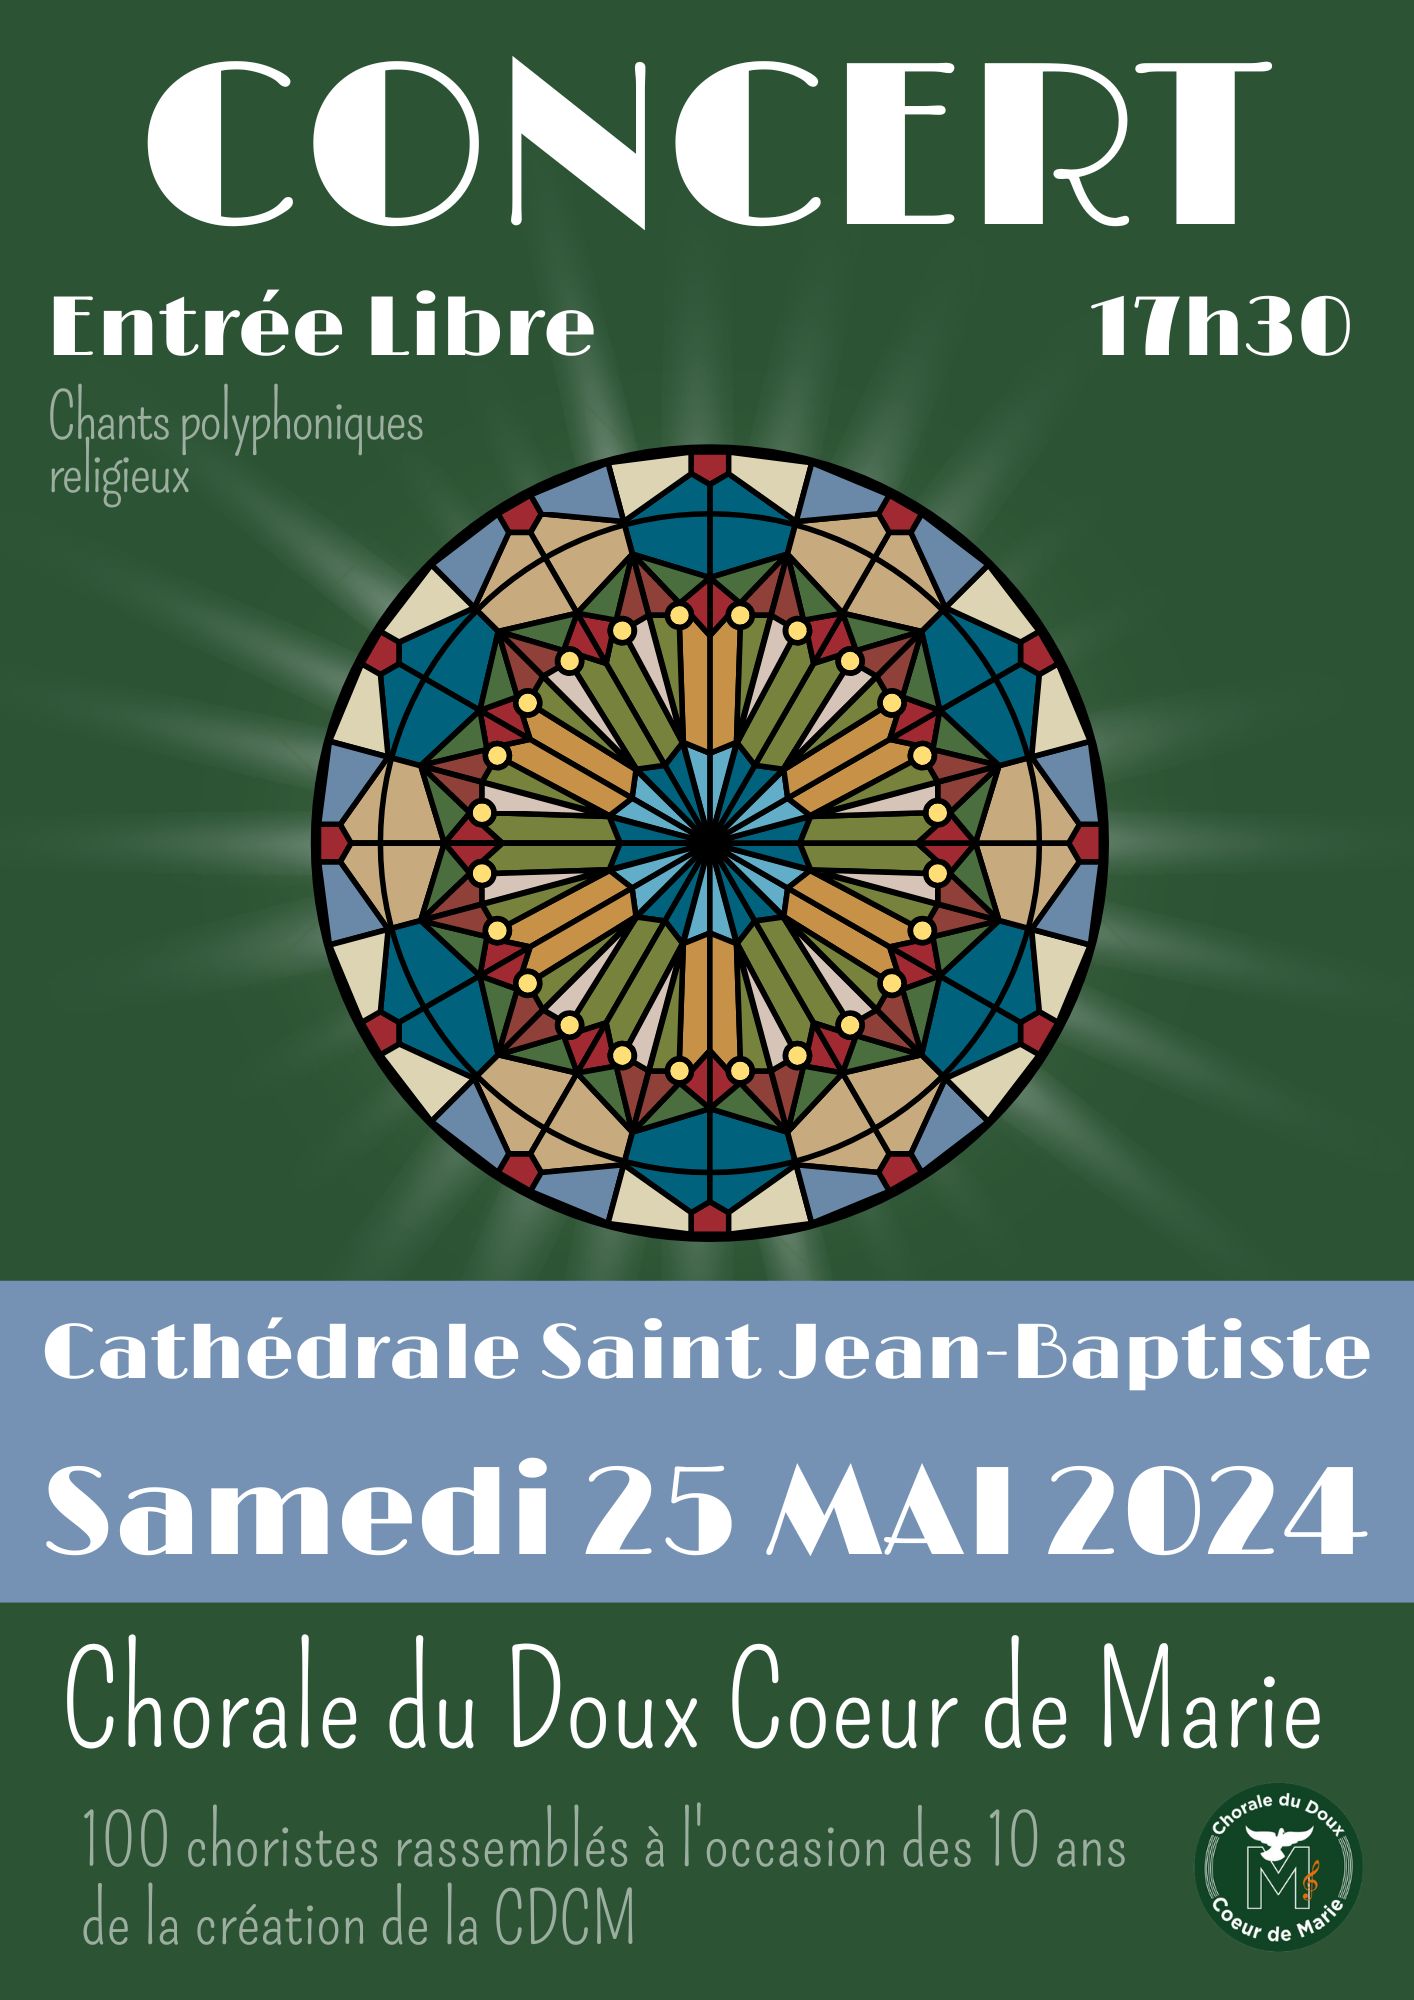 Concert : Chorale du Doux Coeur de Marie - Samedi 25 mai à 17h30